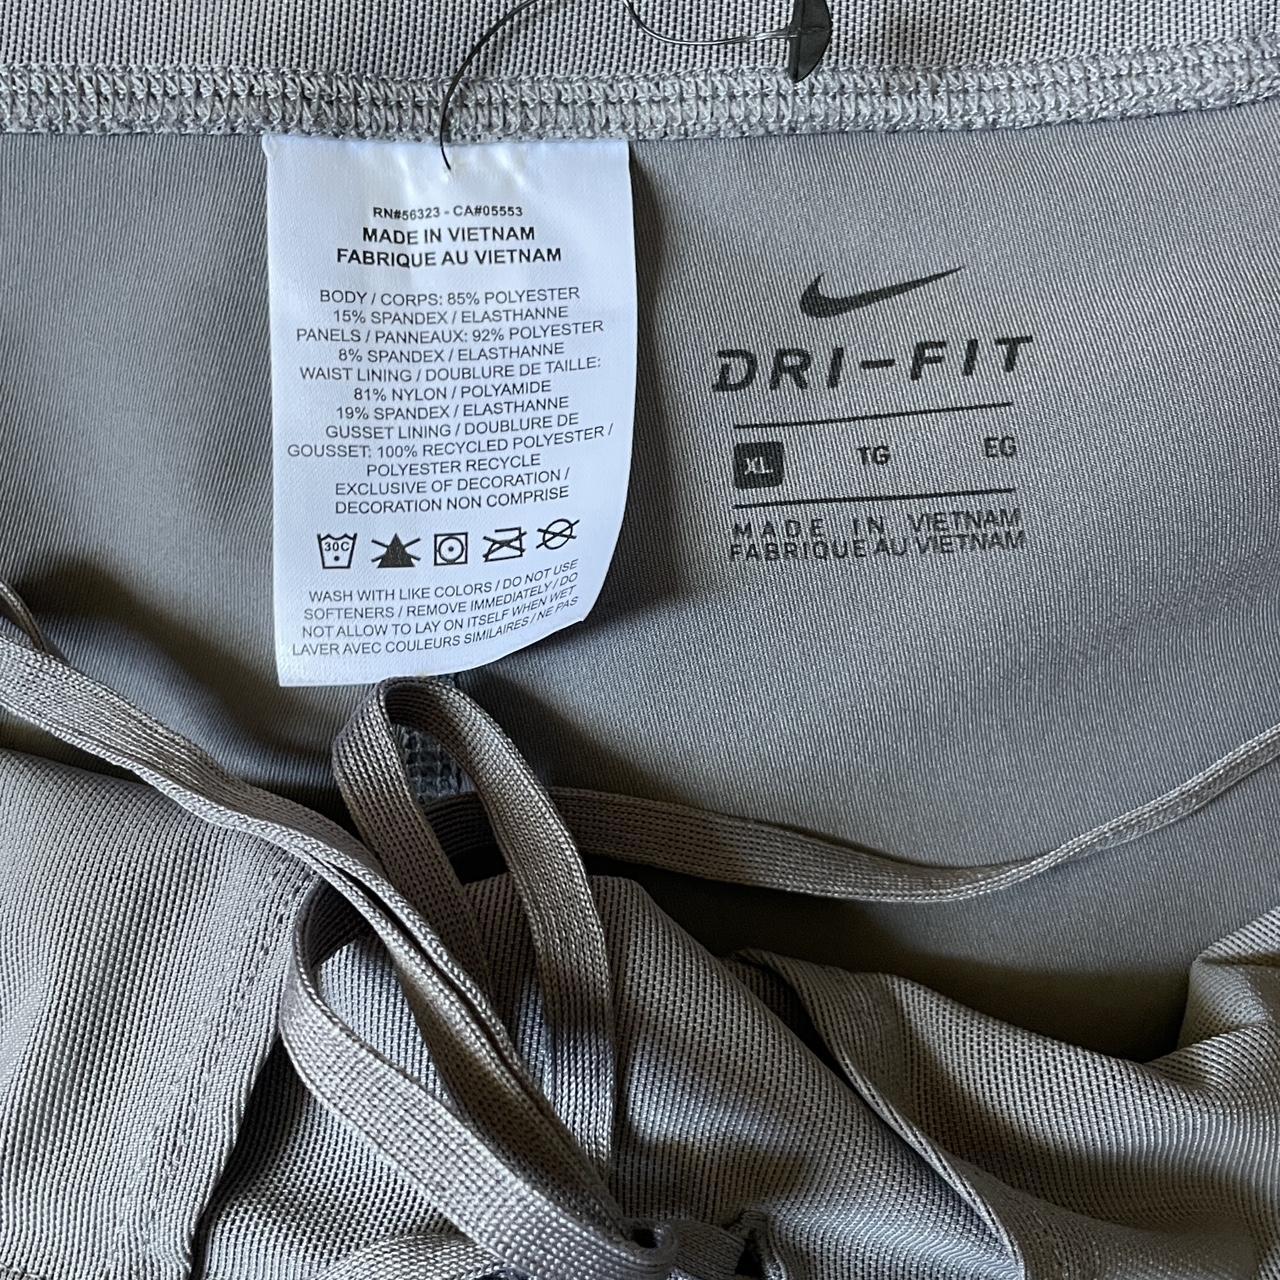 Nike Dri-Fit Athletic Leggings • size; extra large - Depop